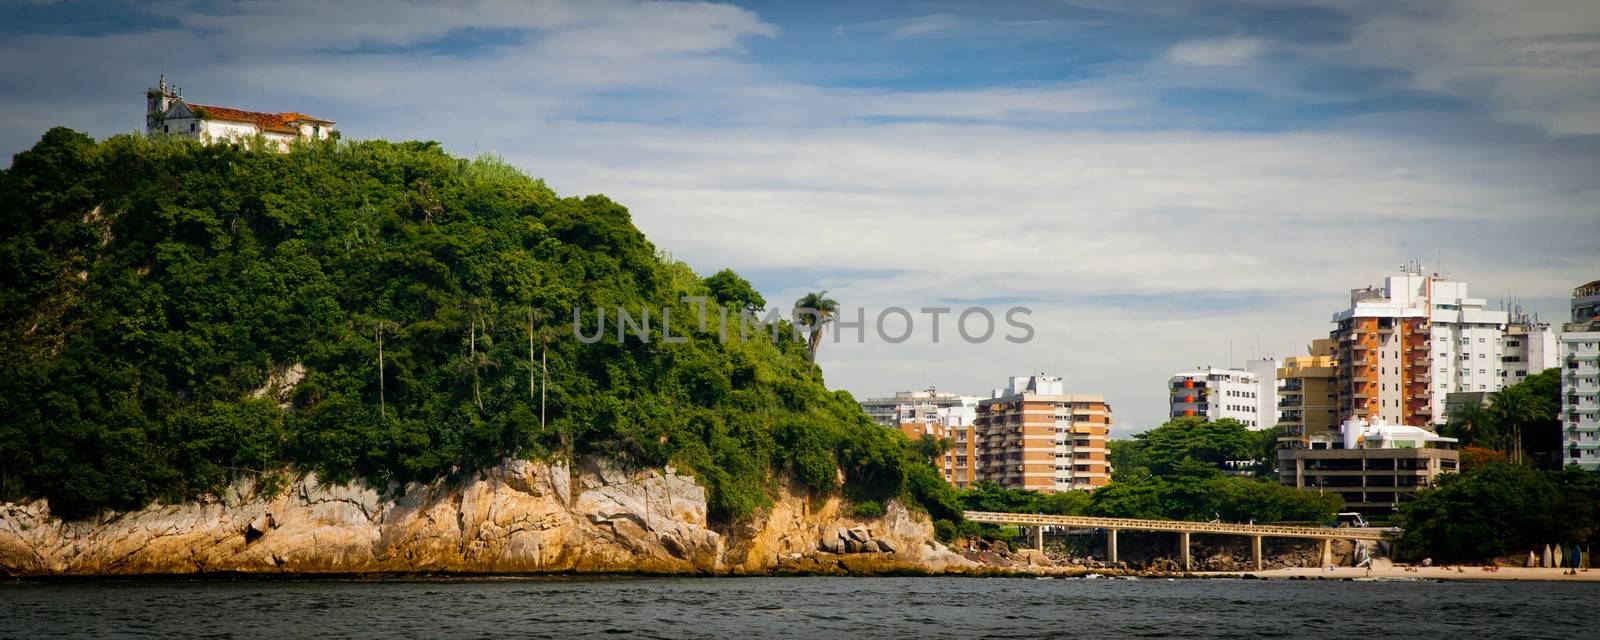 Island of Boa Viagem in the city of Niteroi by CelsoDiniz